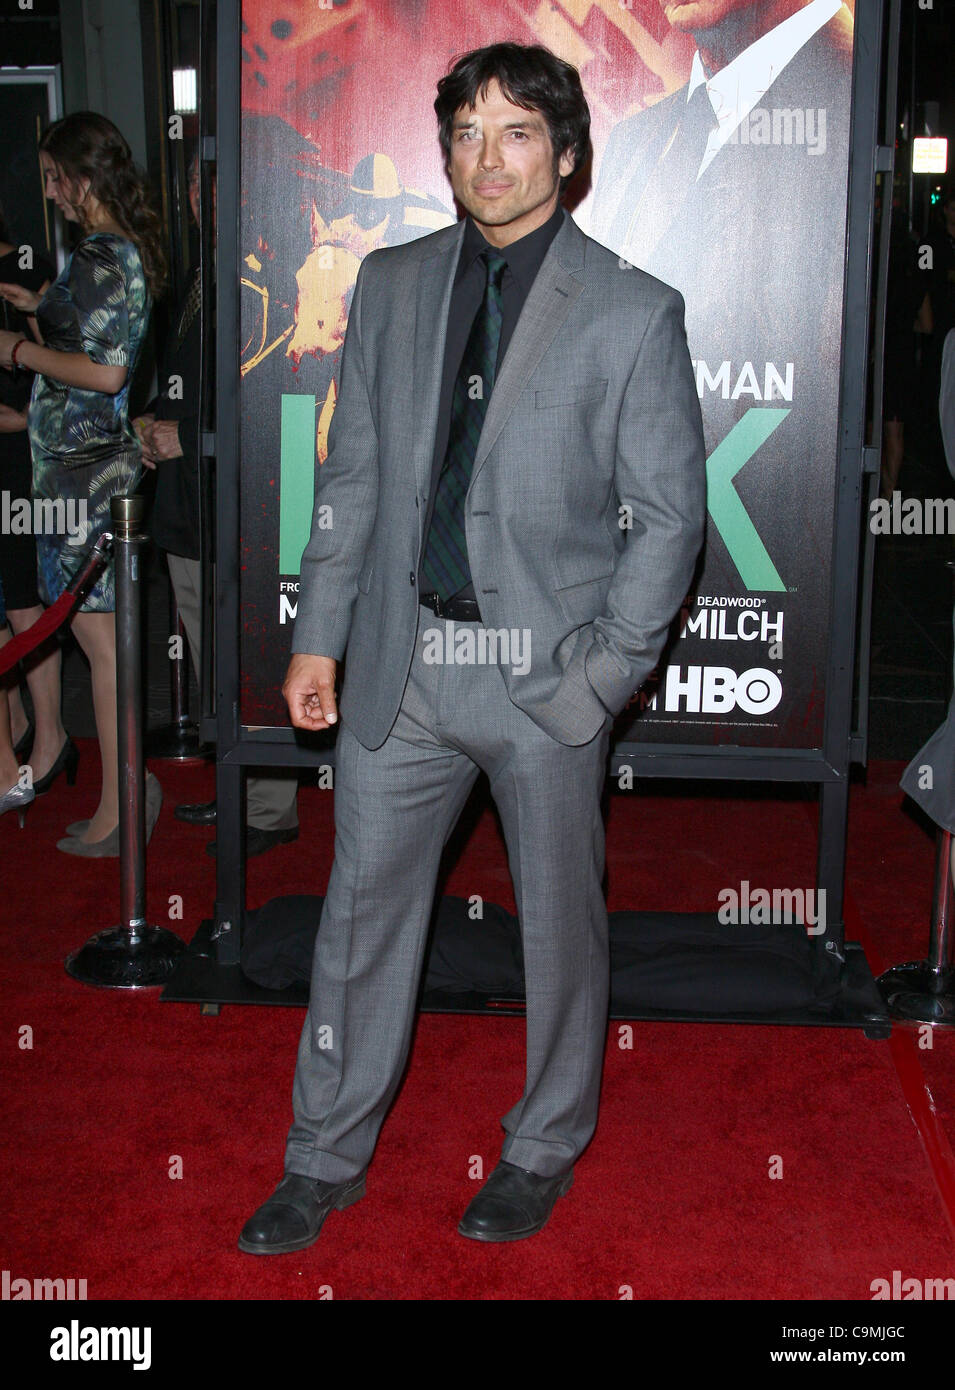 JASON GEDRICK LUCK. HBO SERIES PREMIERE HOLLYWOOD LOS ANGELES CALIFORNIA USA 25 January 2012 Stock Photo